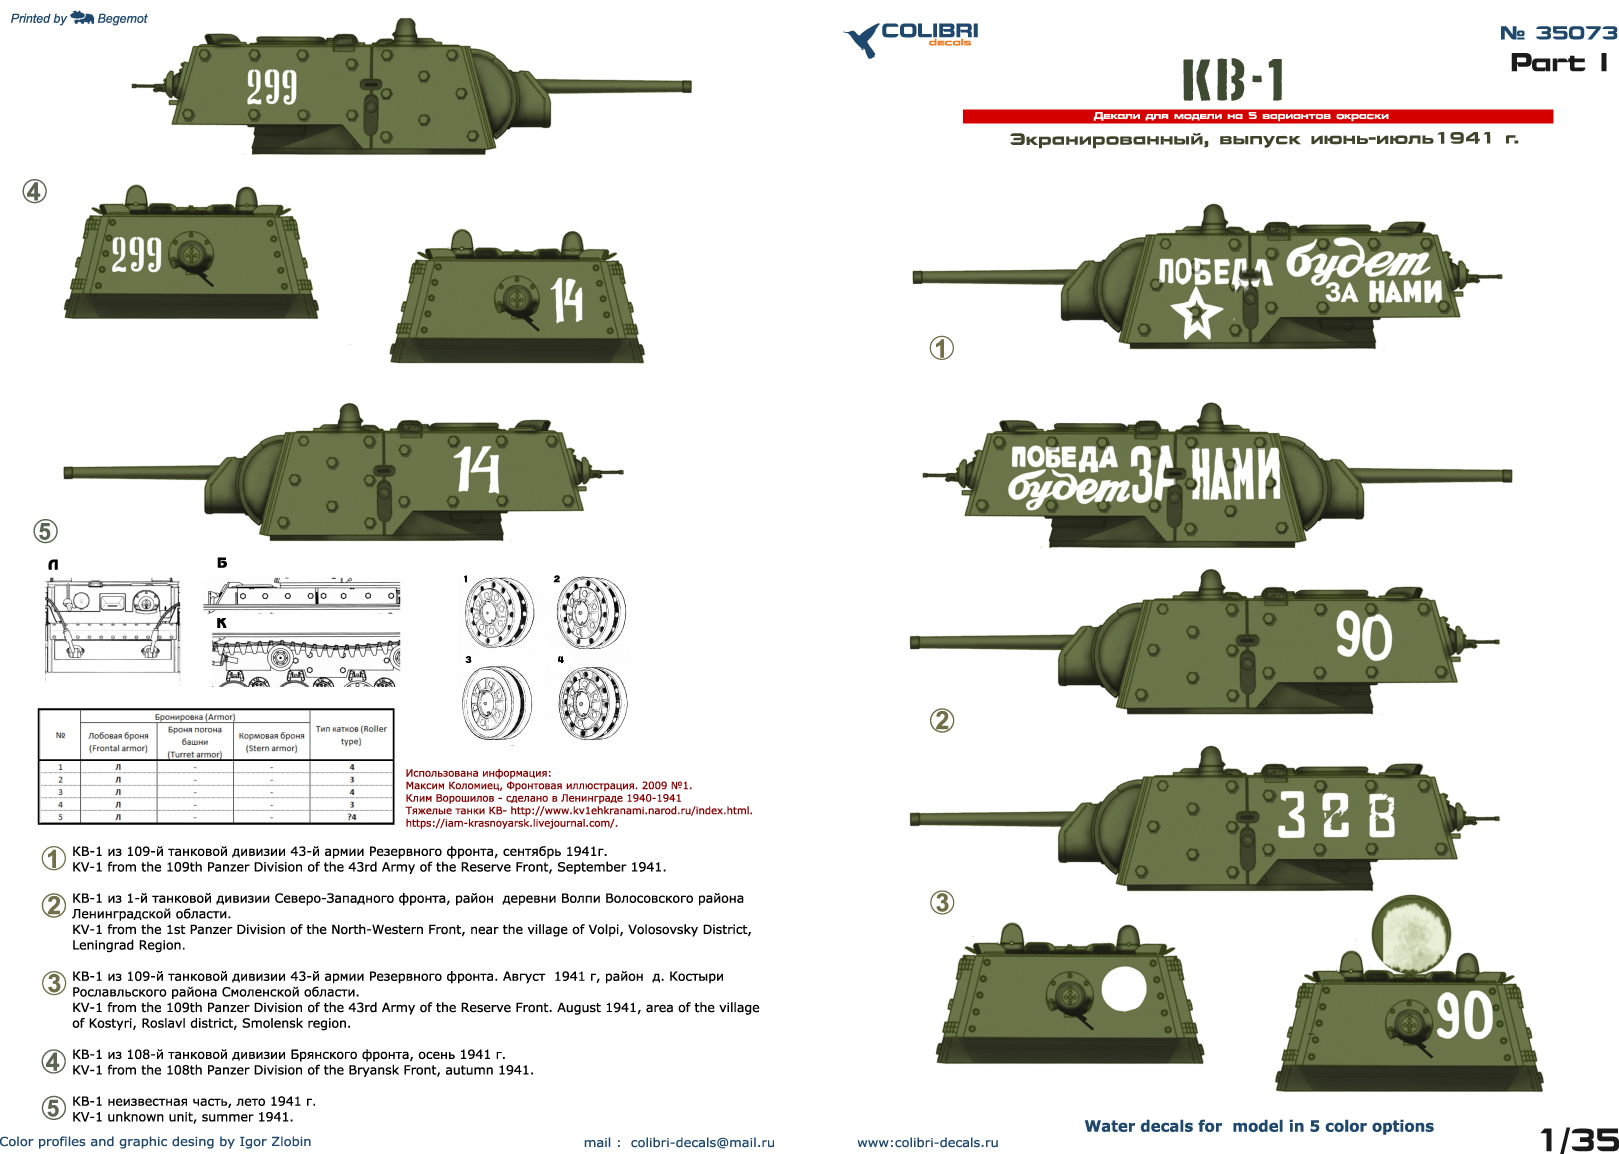 Decal 1/35 KV-1 (w/Applique Armor) Part I (Colibri Decals)